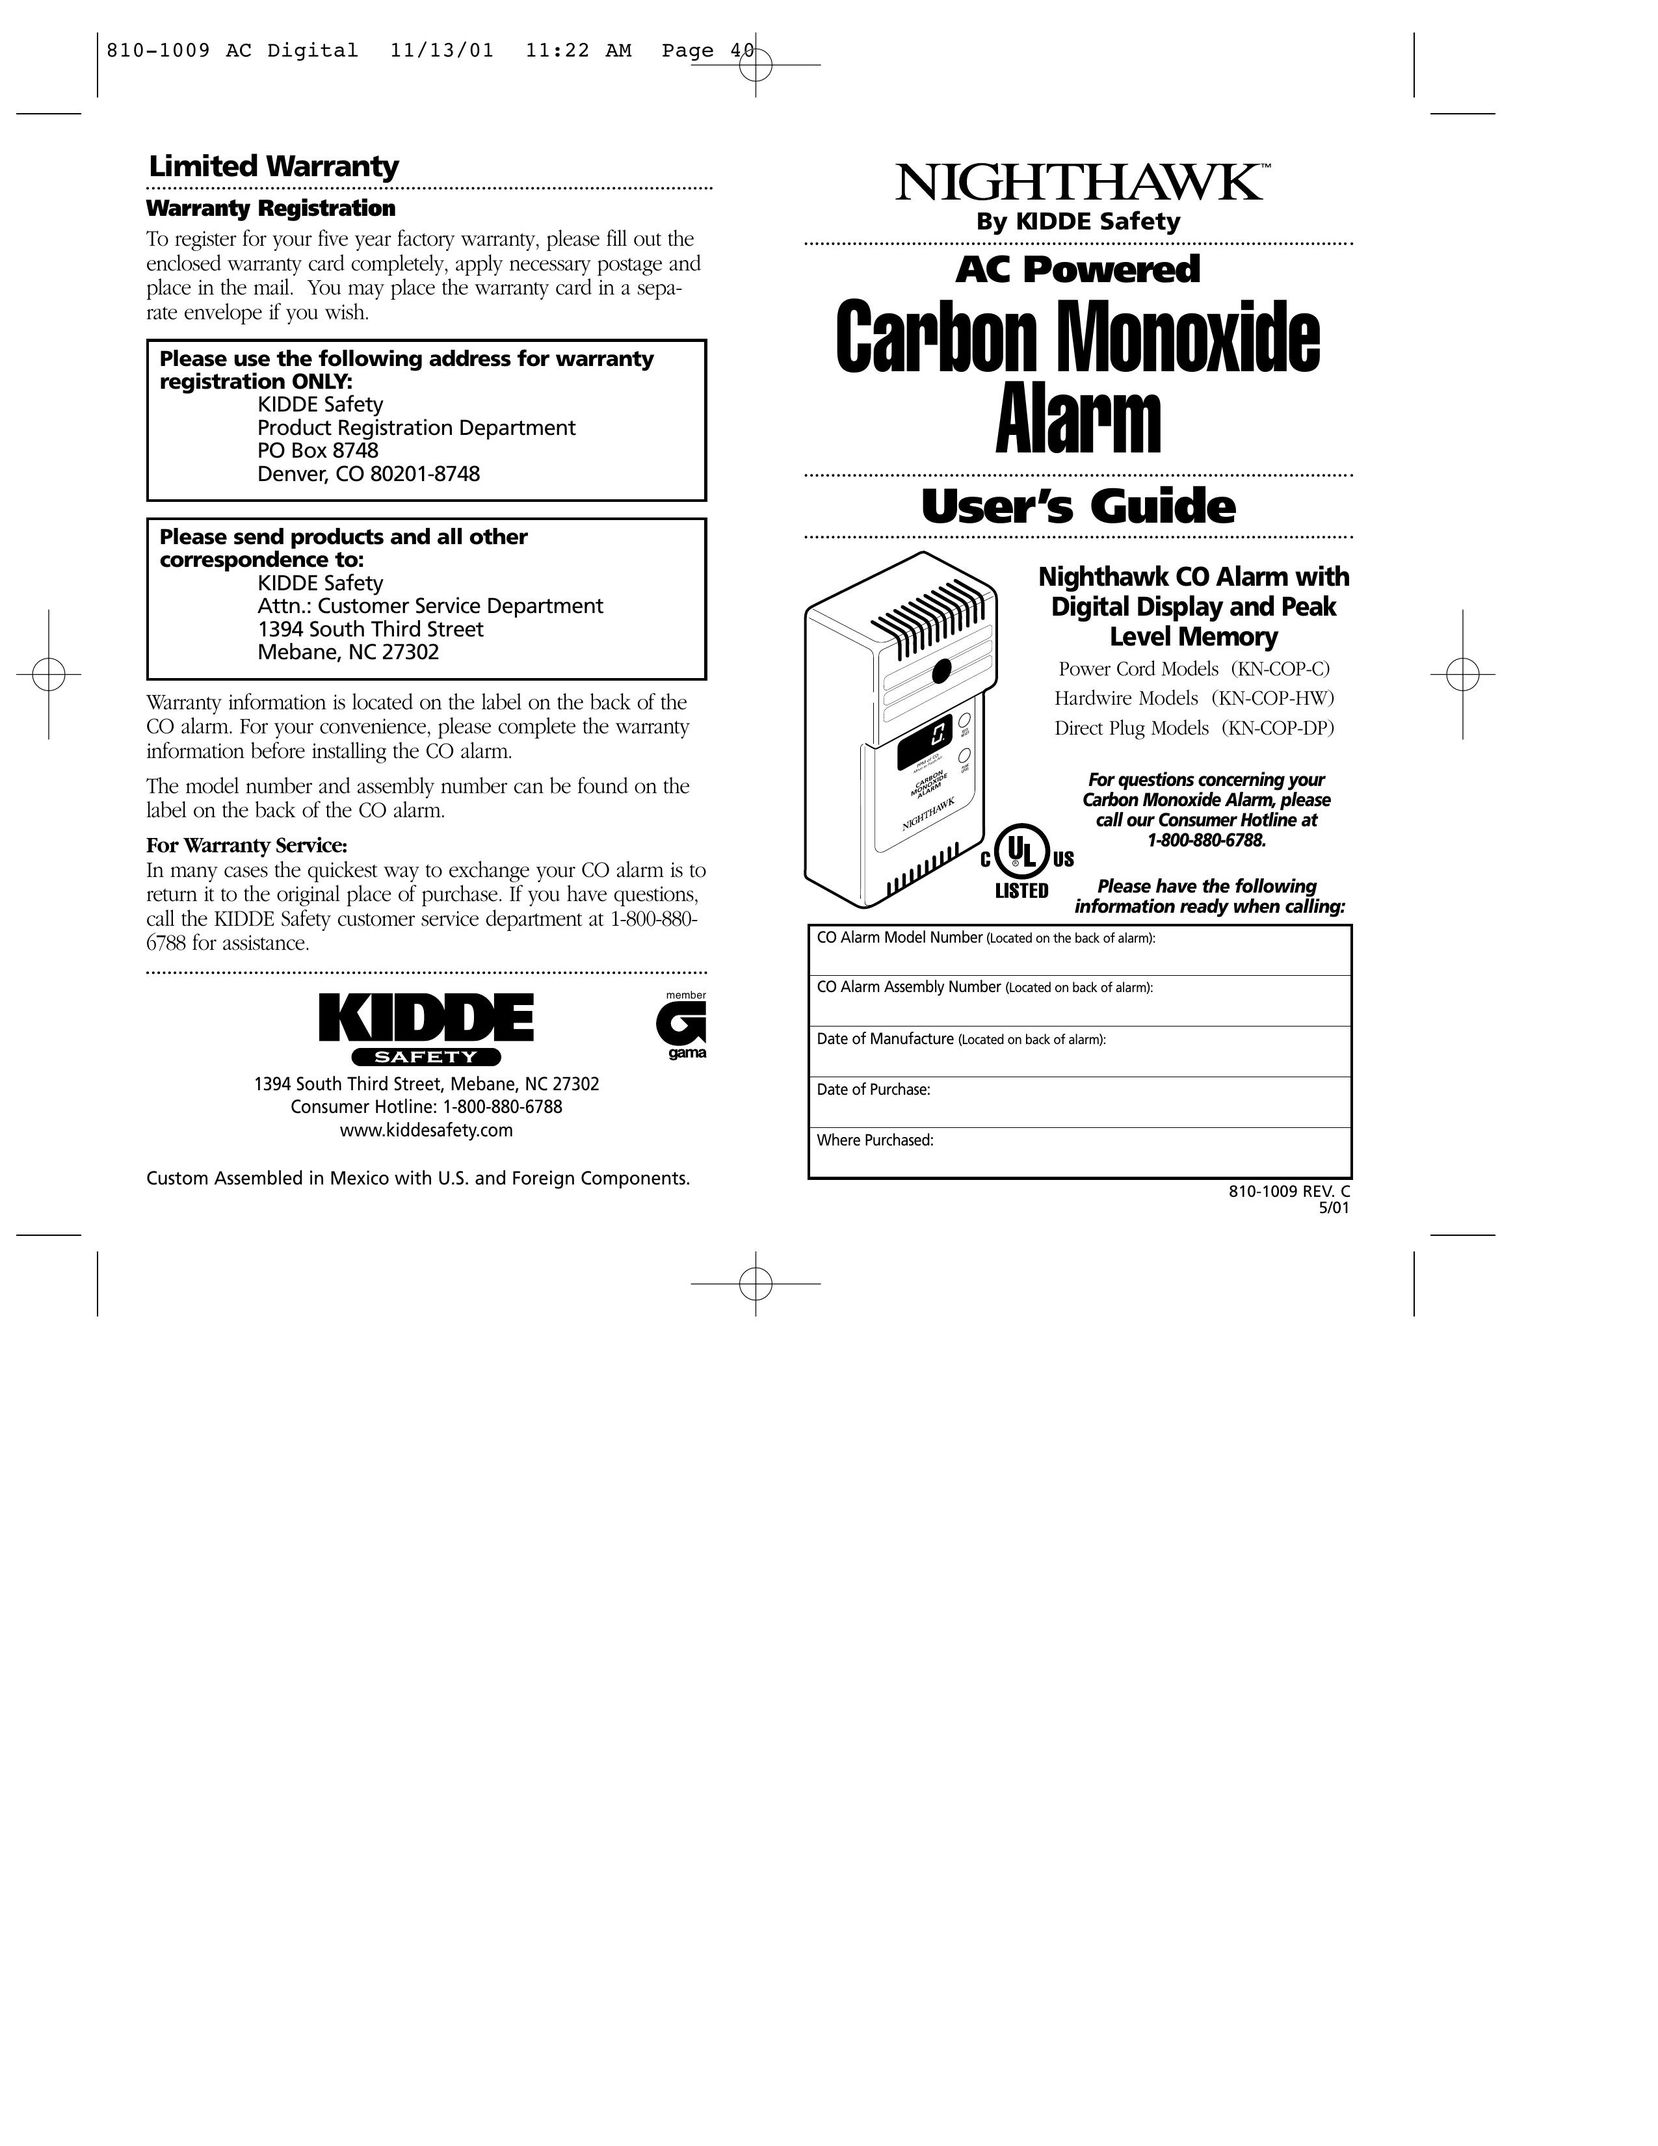 Nighthawk KN-COP-HW Carbon Monoxide Alarm User Manual